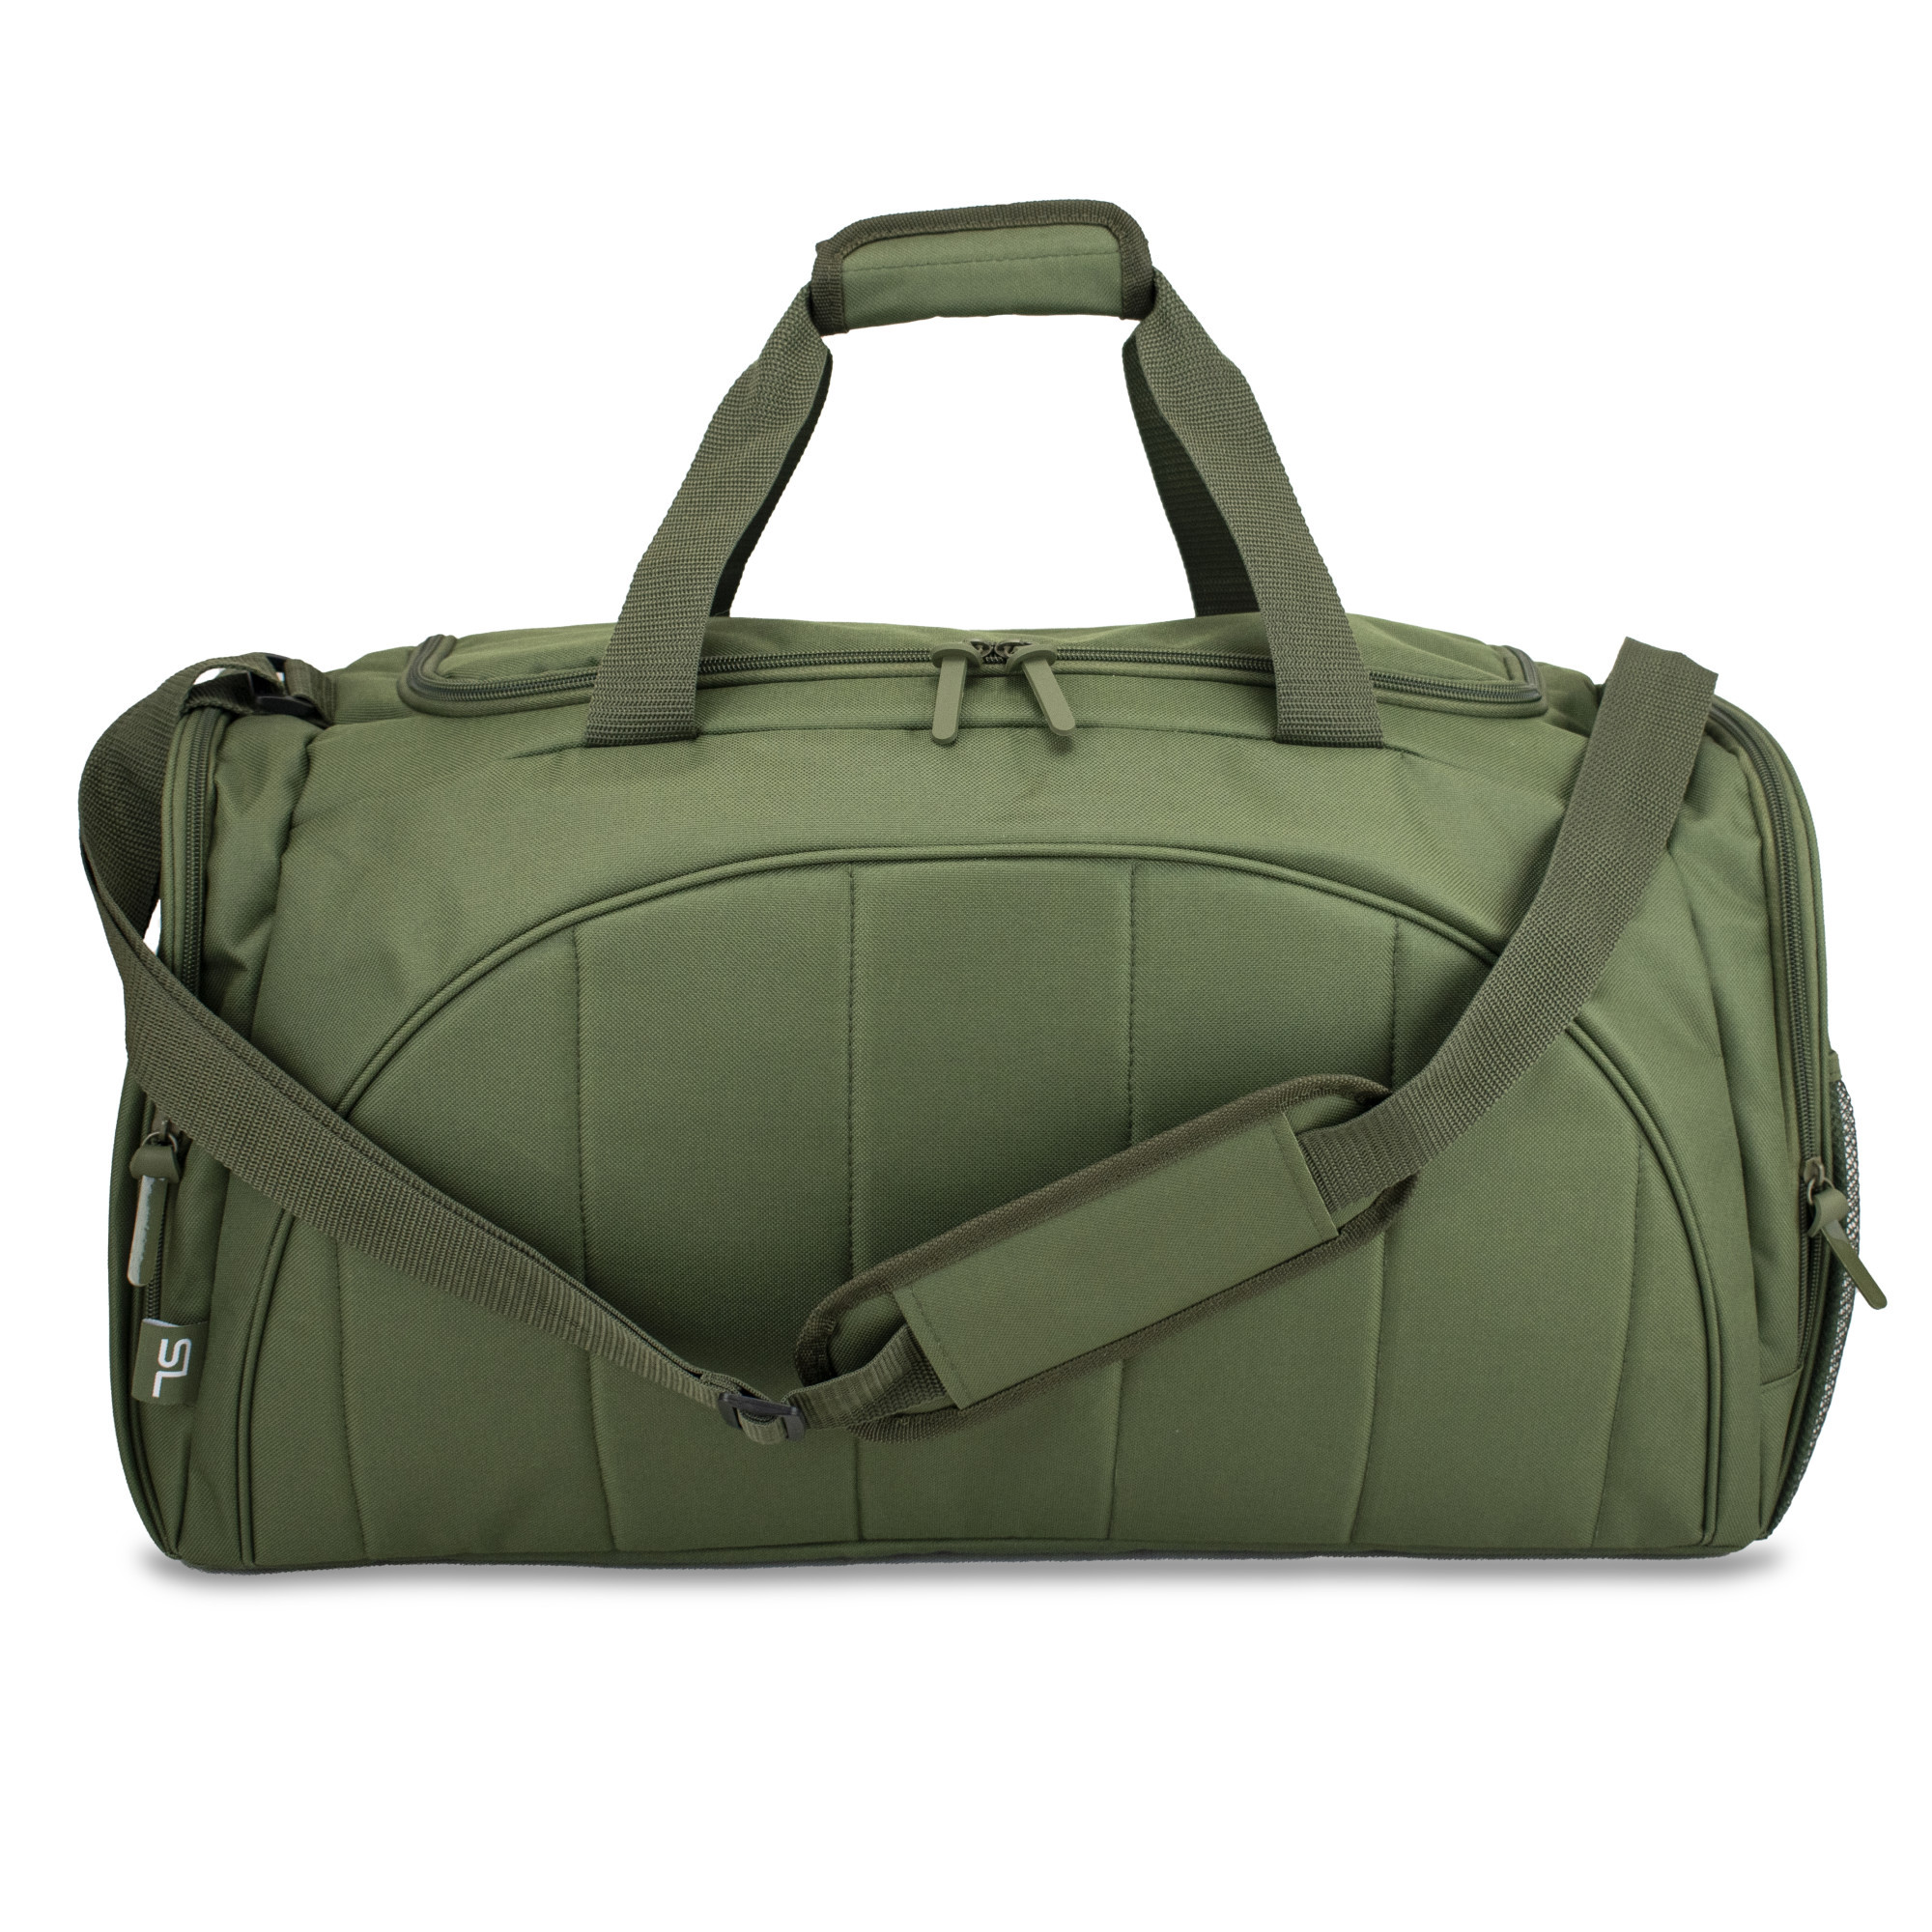 Bag Khaki 57 cm x 30,5 cm x 27 cm model 17959332 - Semiline